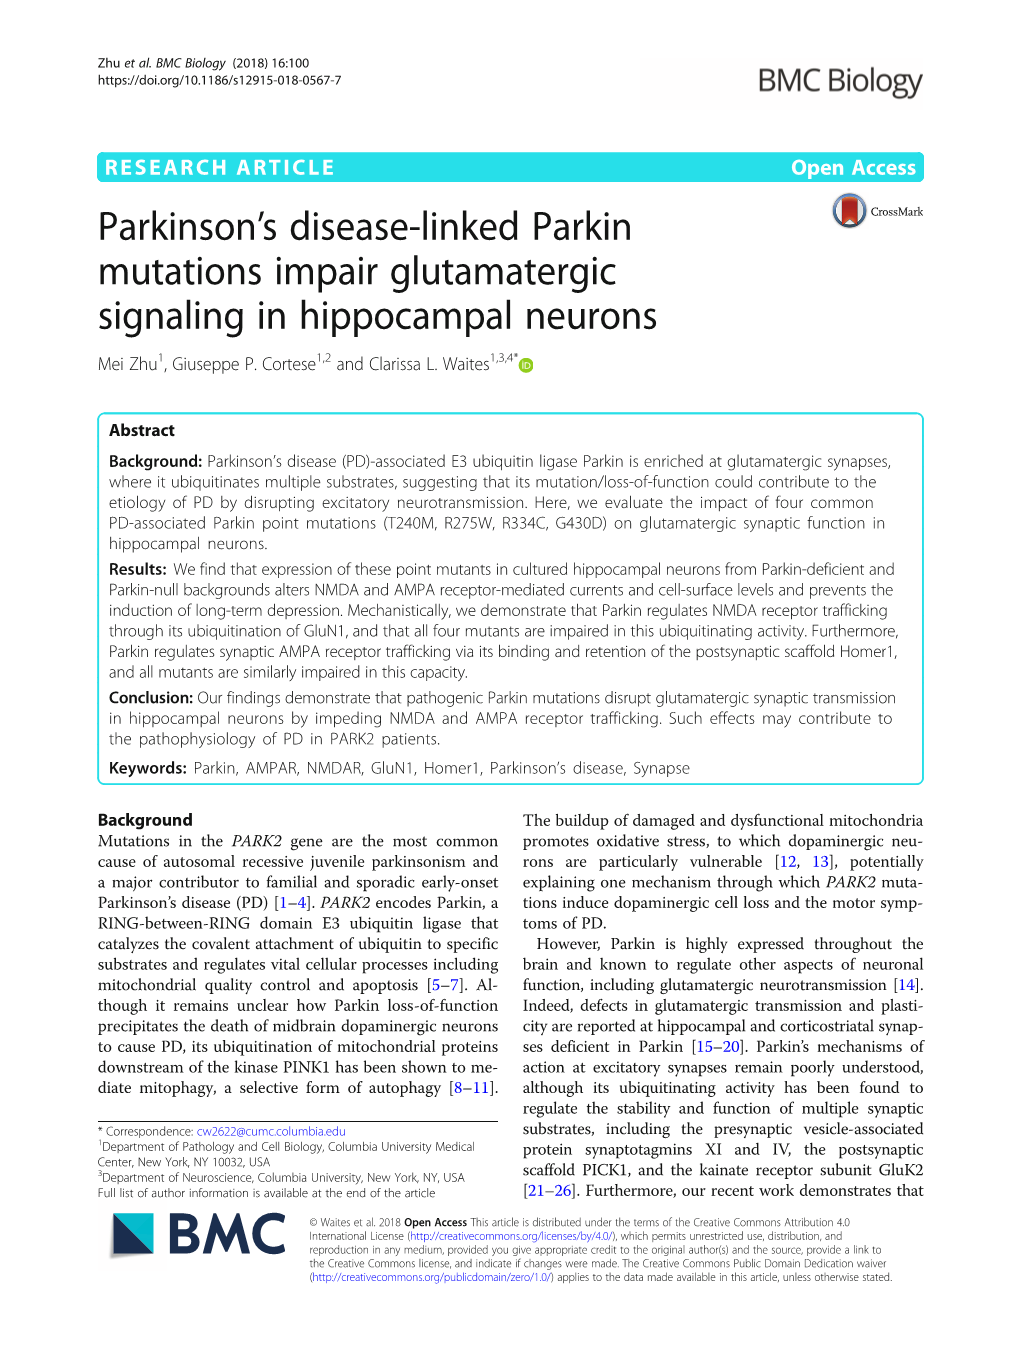 Parkinson's Disease-Linked Parkin Mutations Impair Glutamatergic